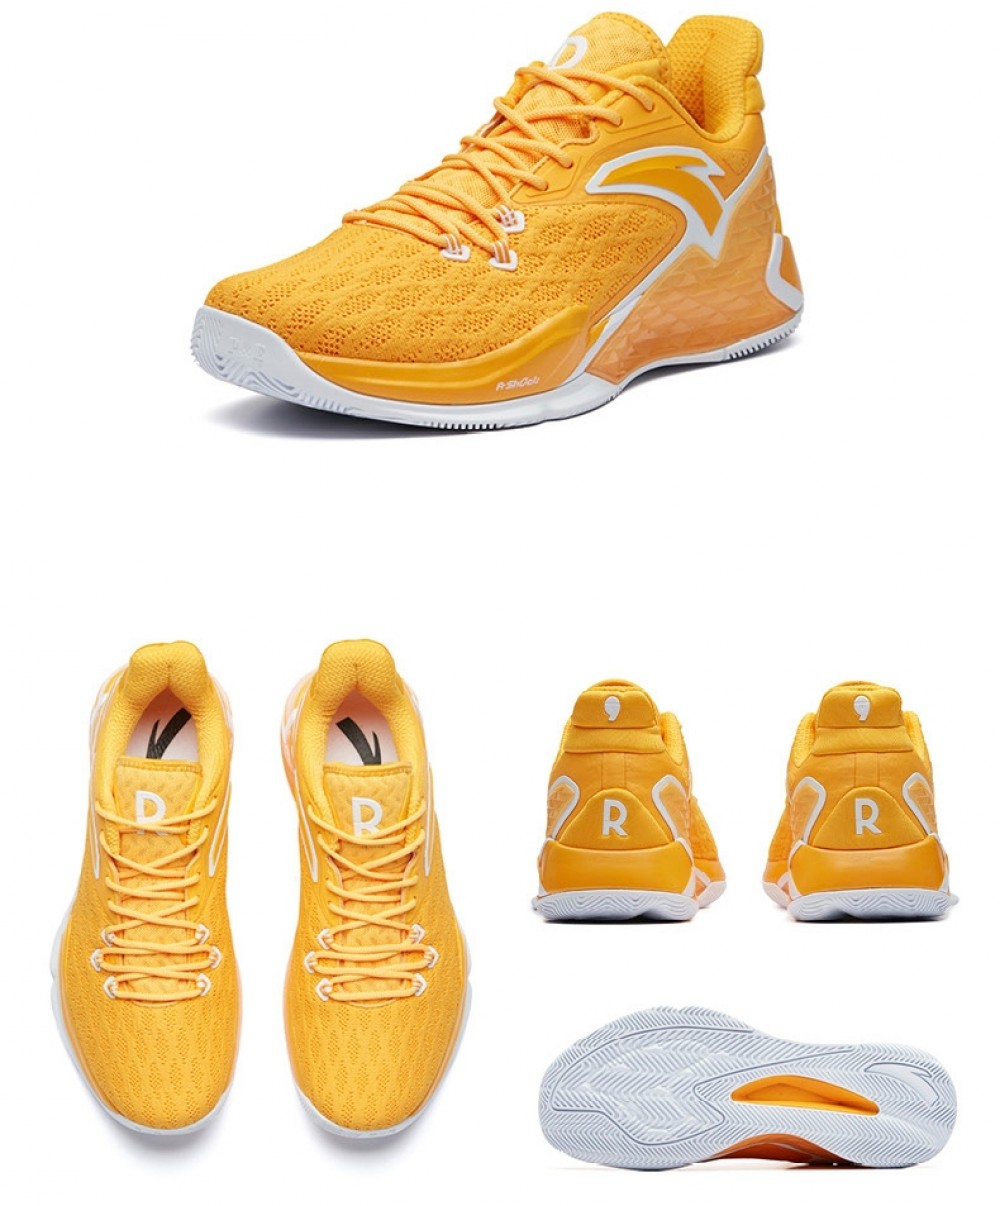 2019 Summer Anta Rajon Rondo RR5 Lakers NBA Basketball Shoes - Yellow/White